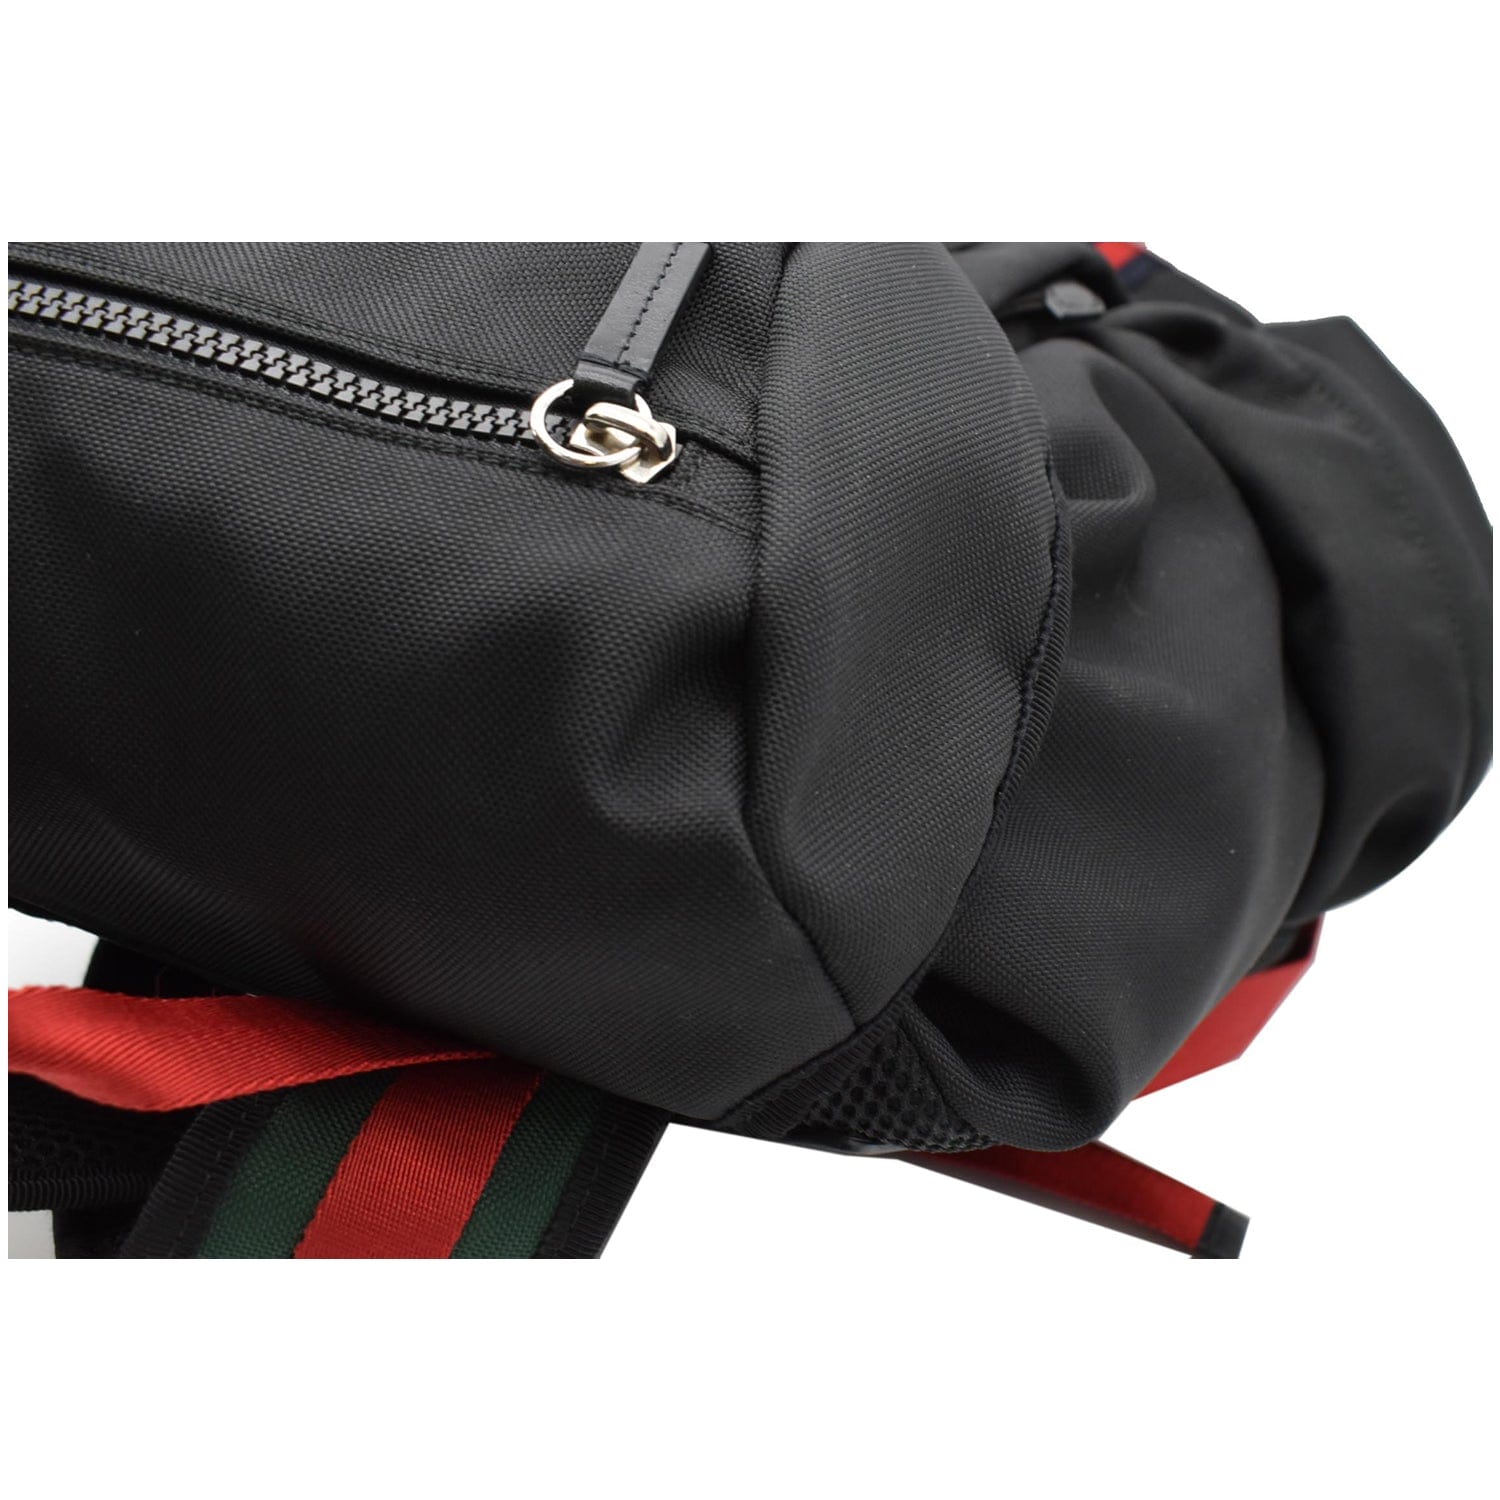 GUCCI Techno Canvas Unisex Backpack 429037, 15"L x 5"W x